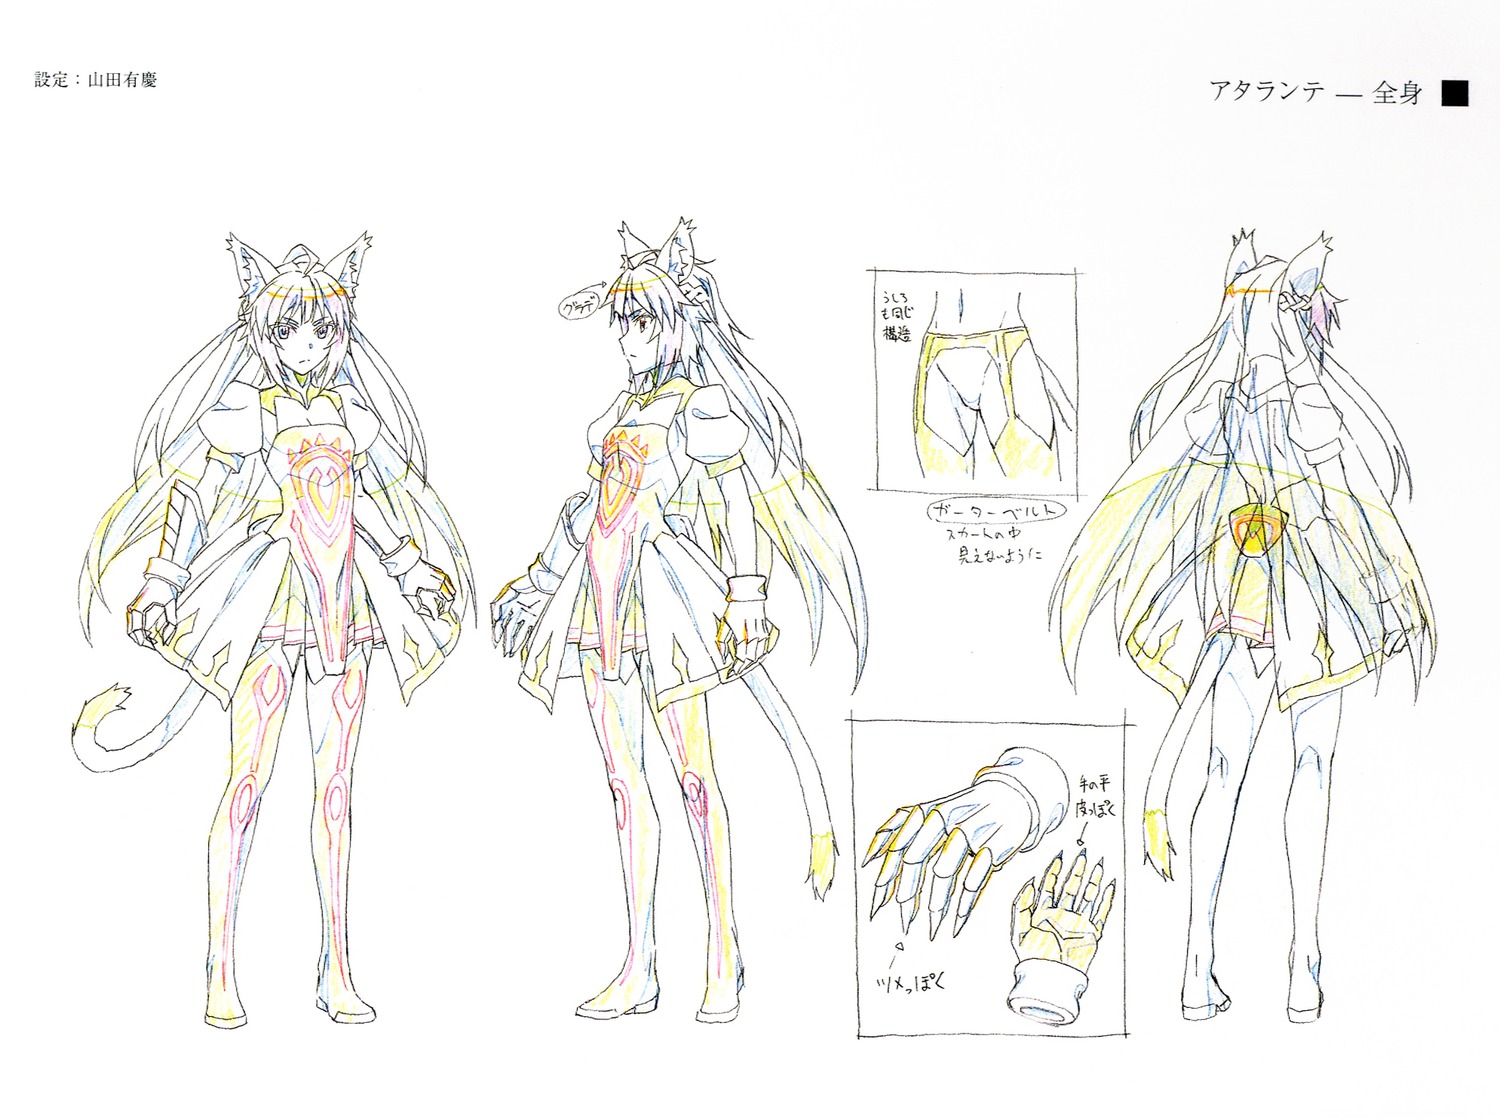 Yuukei Yamada Fate Apocrypha Fate Series Character Design Production Materials Settei 64036 Sakugabooru